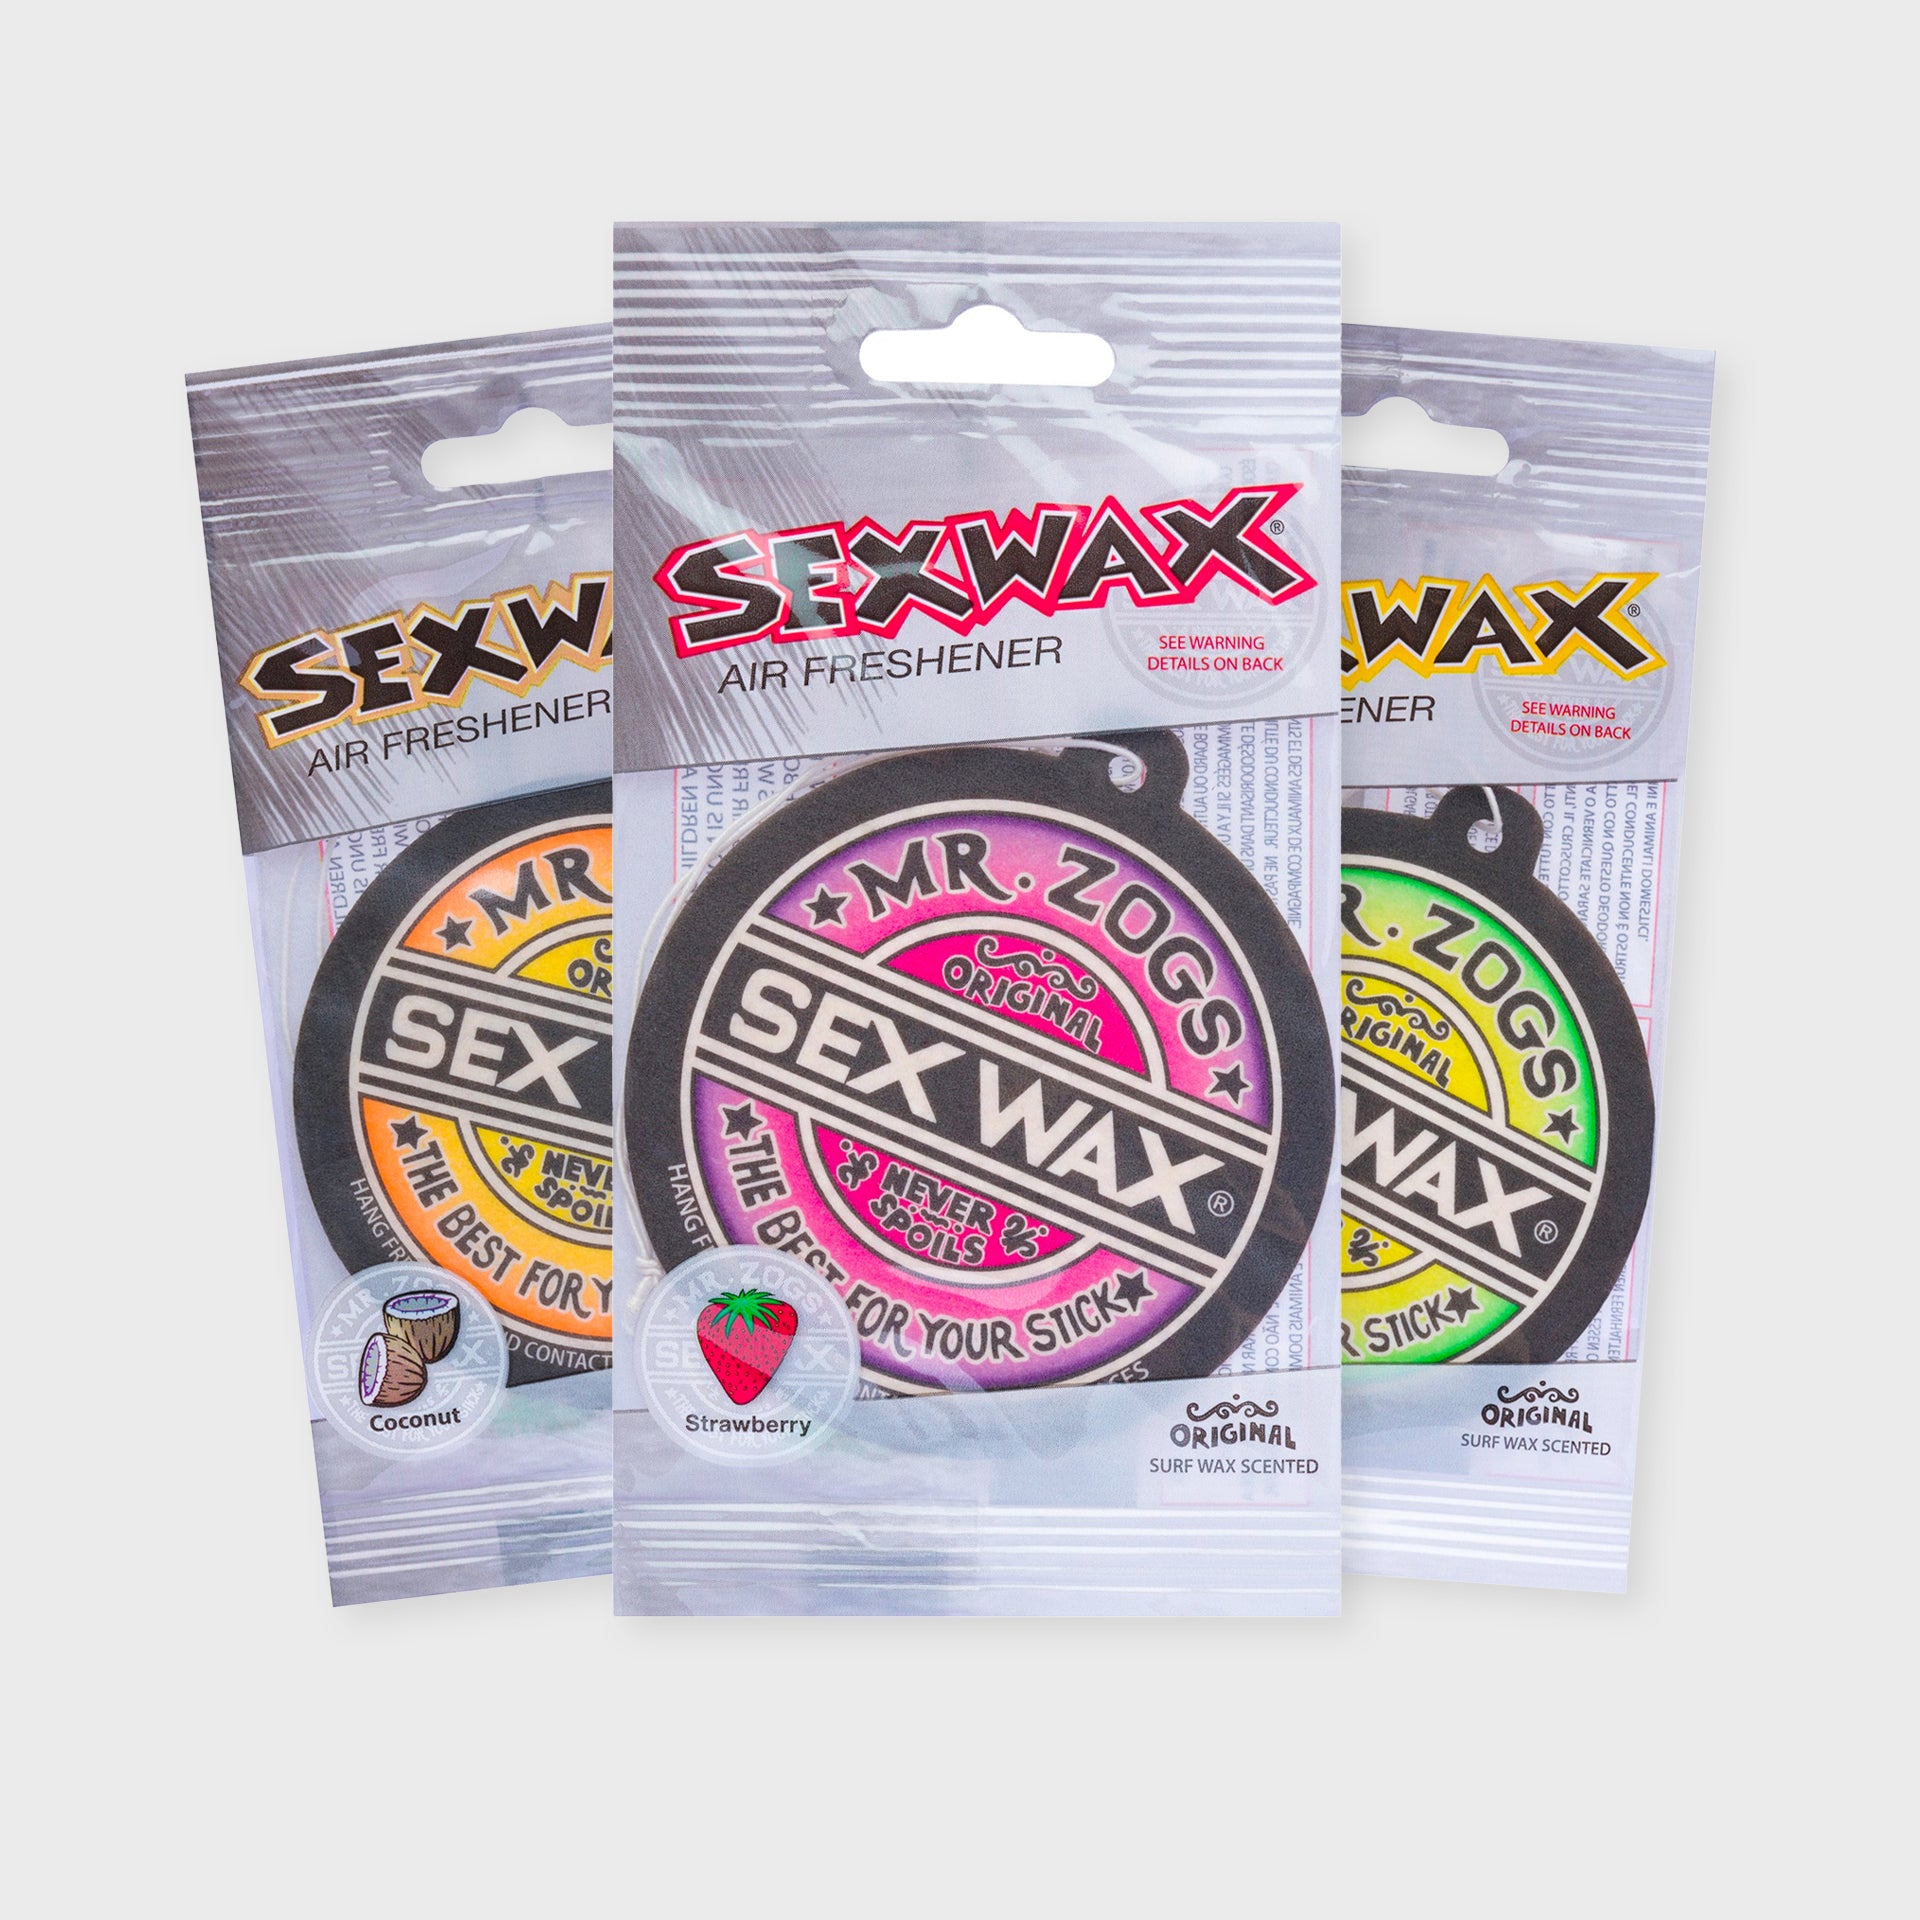 Sex Wax Air Fresheners